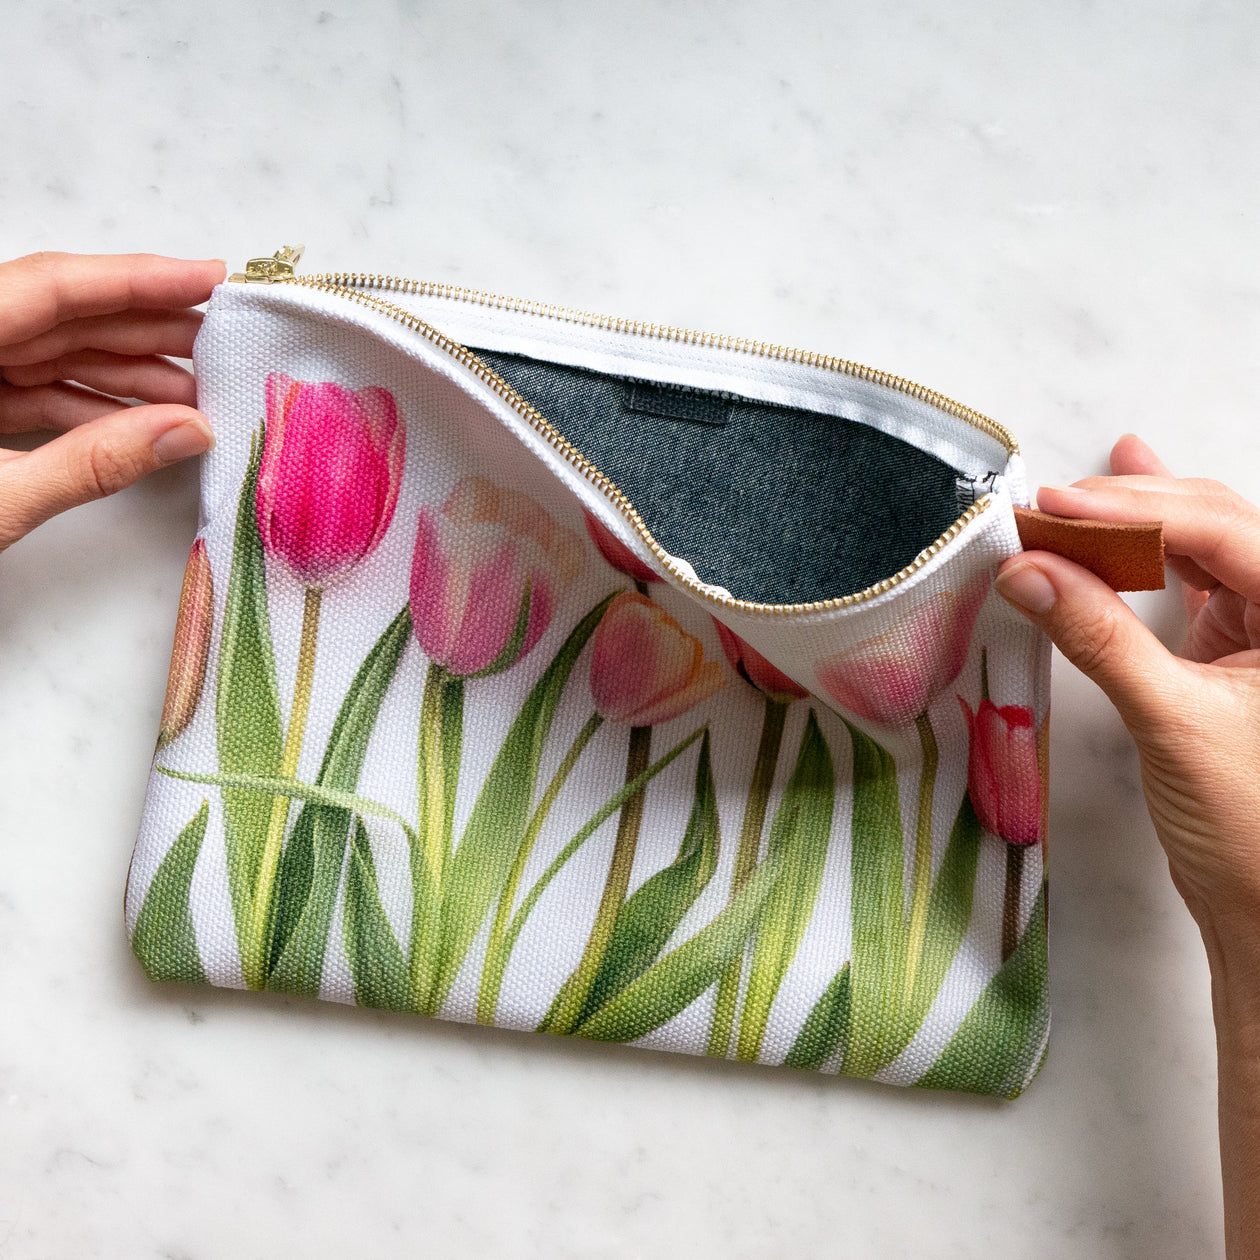 Zipper Bag  ~ Pink Tulips